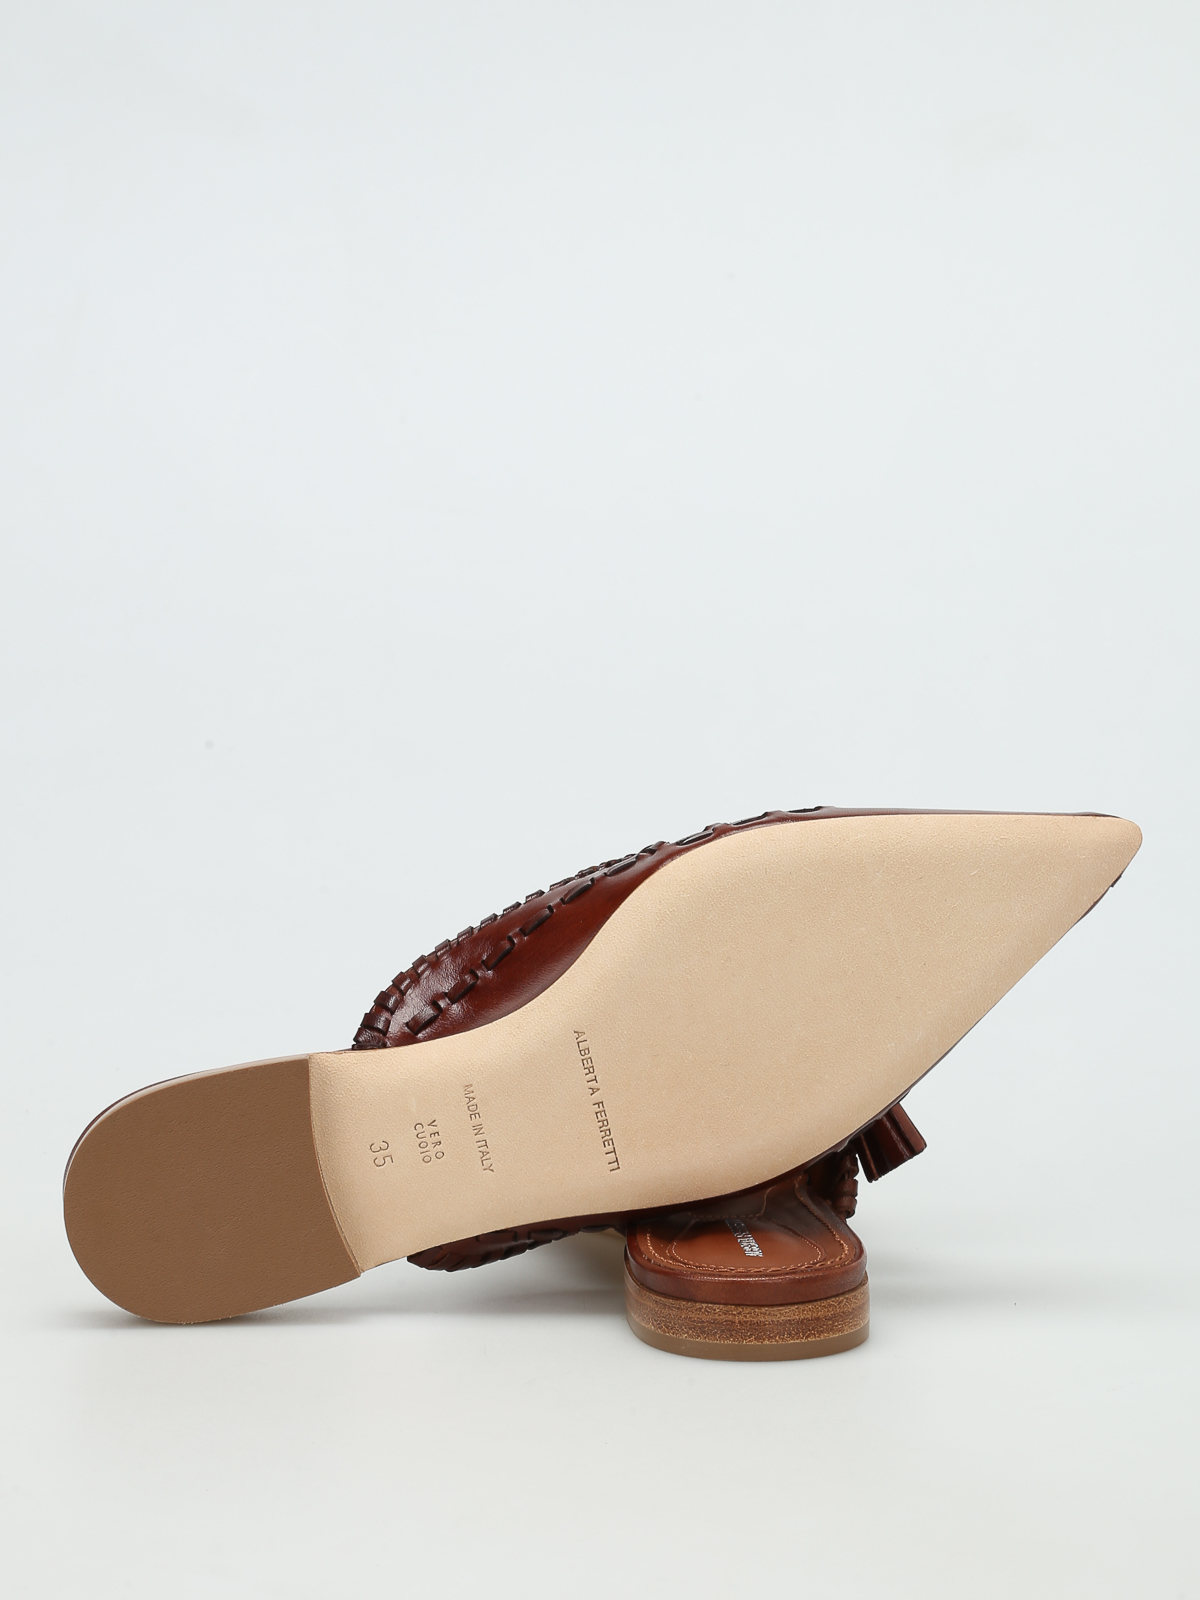 leather slipper mules